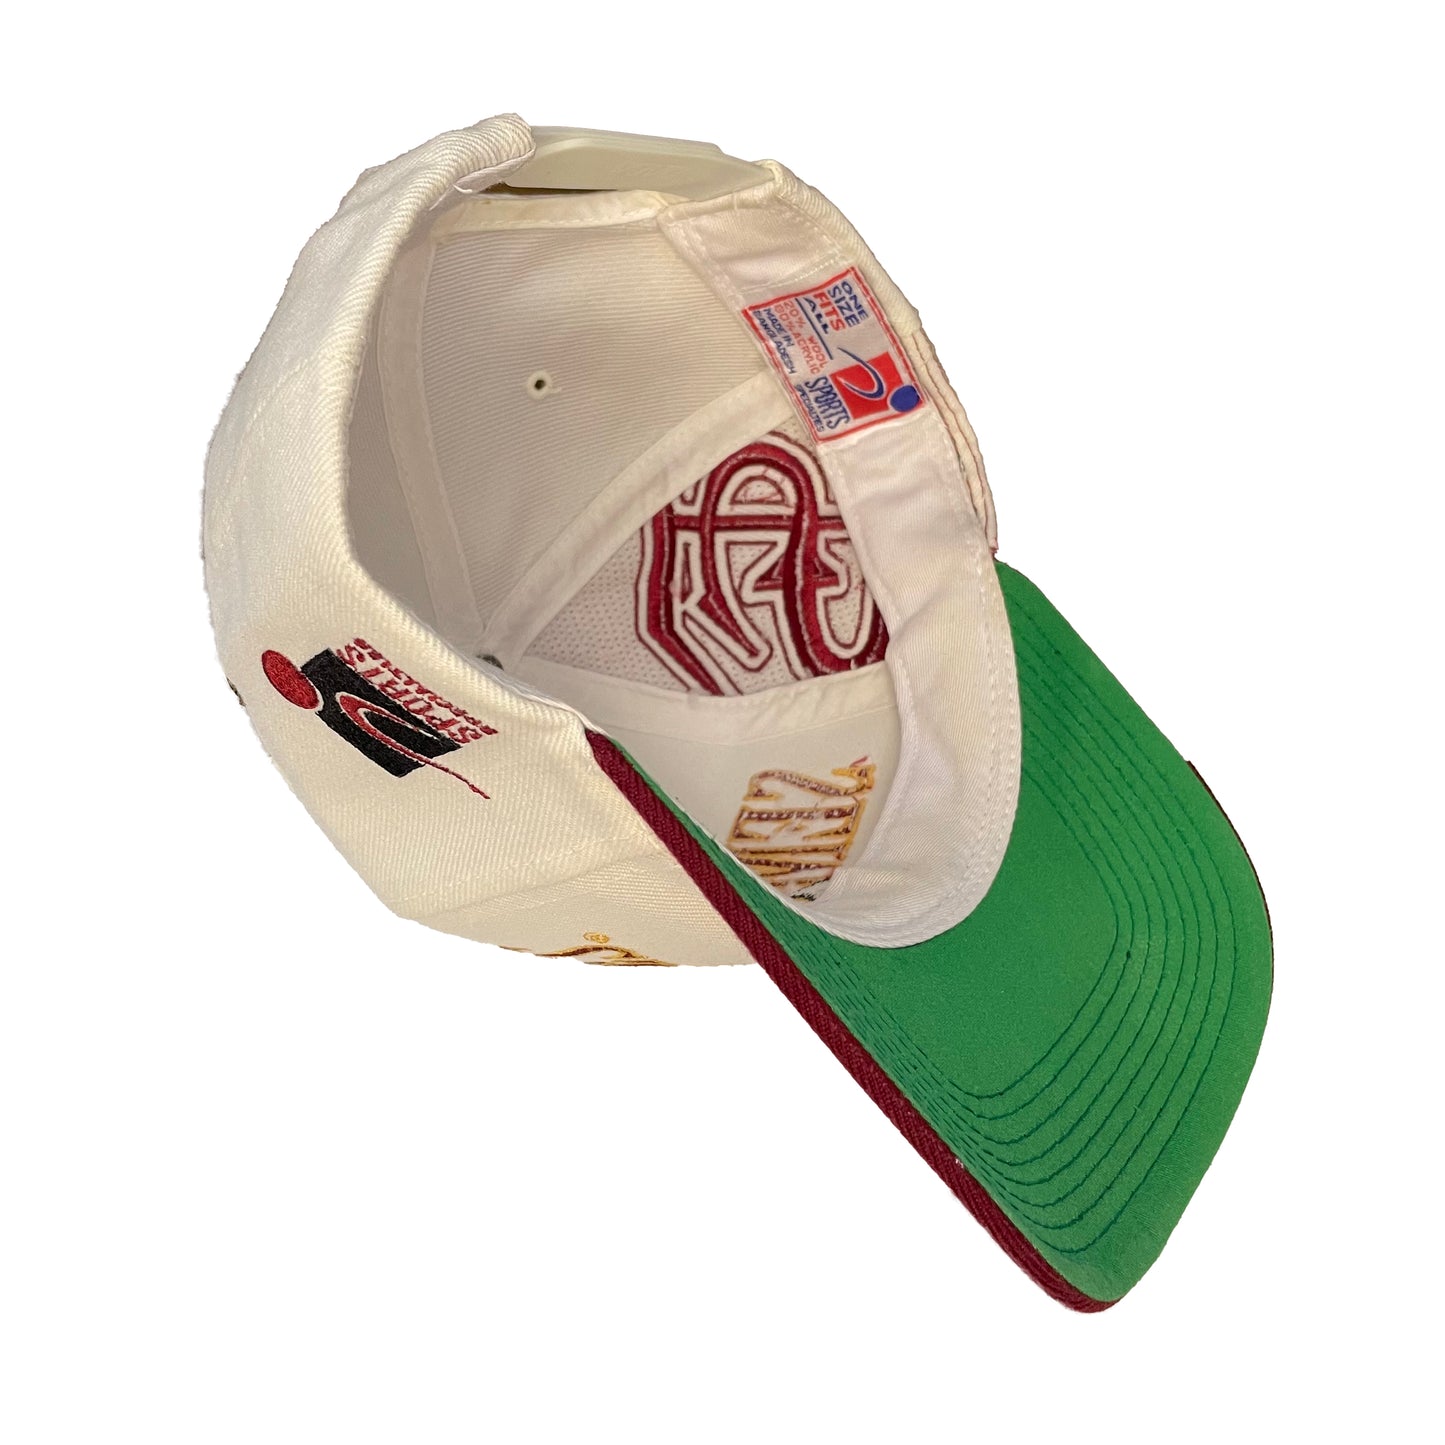 Florida State Seminoles FSU Sports Specialties "Laser" hat